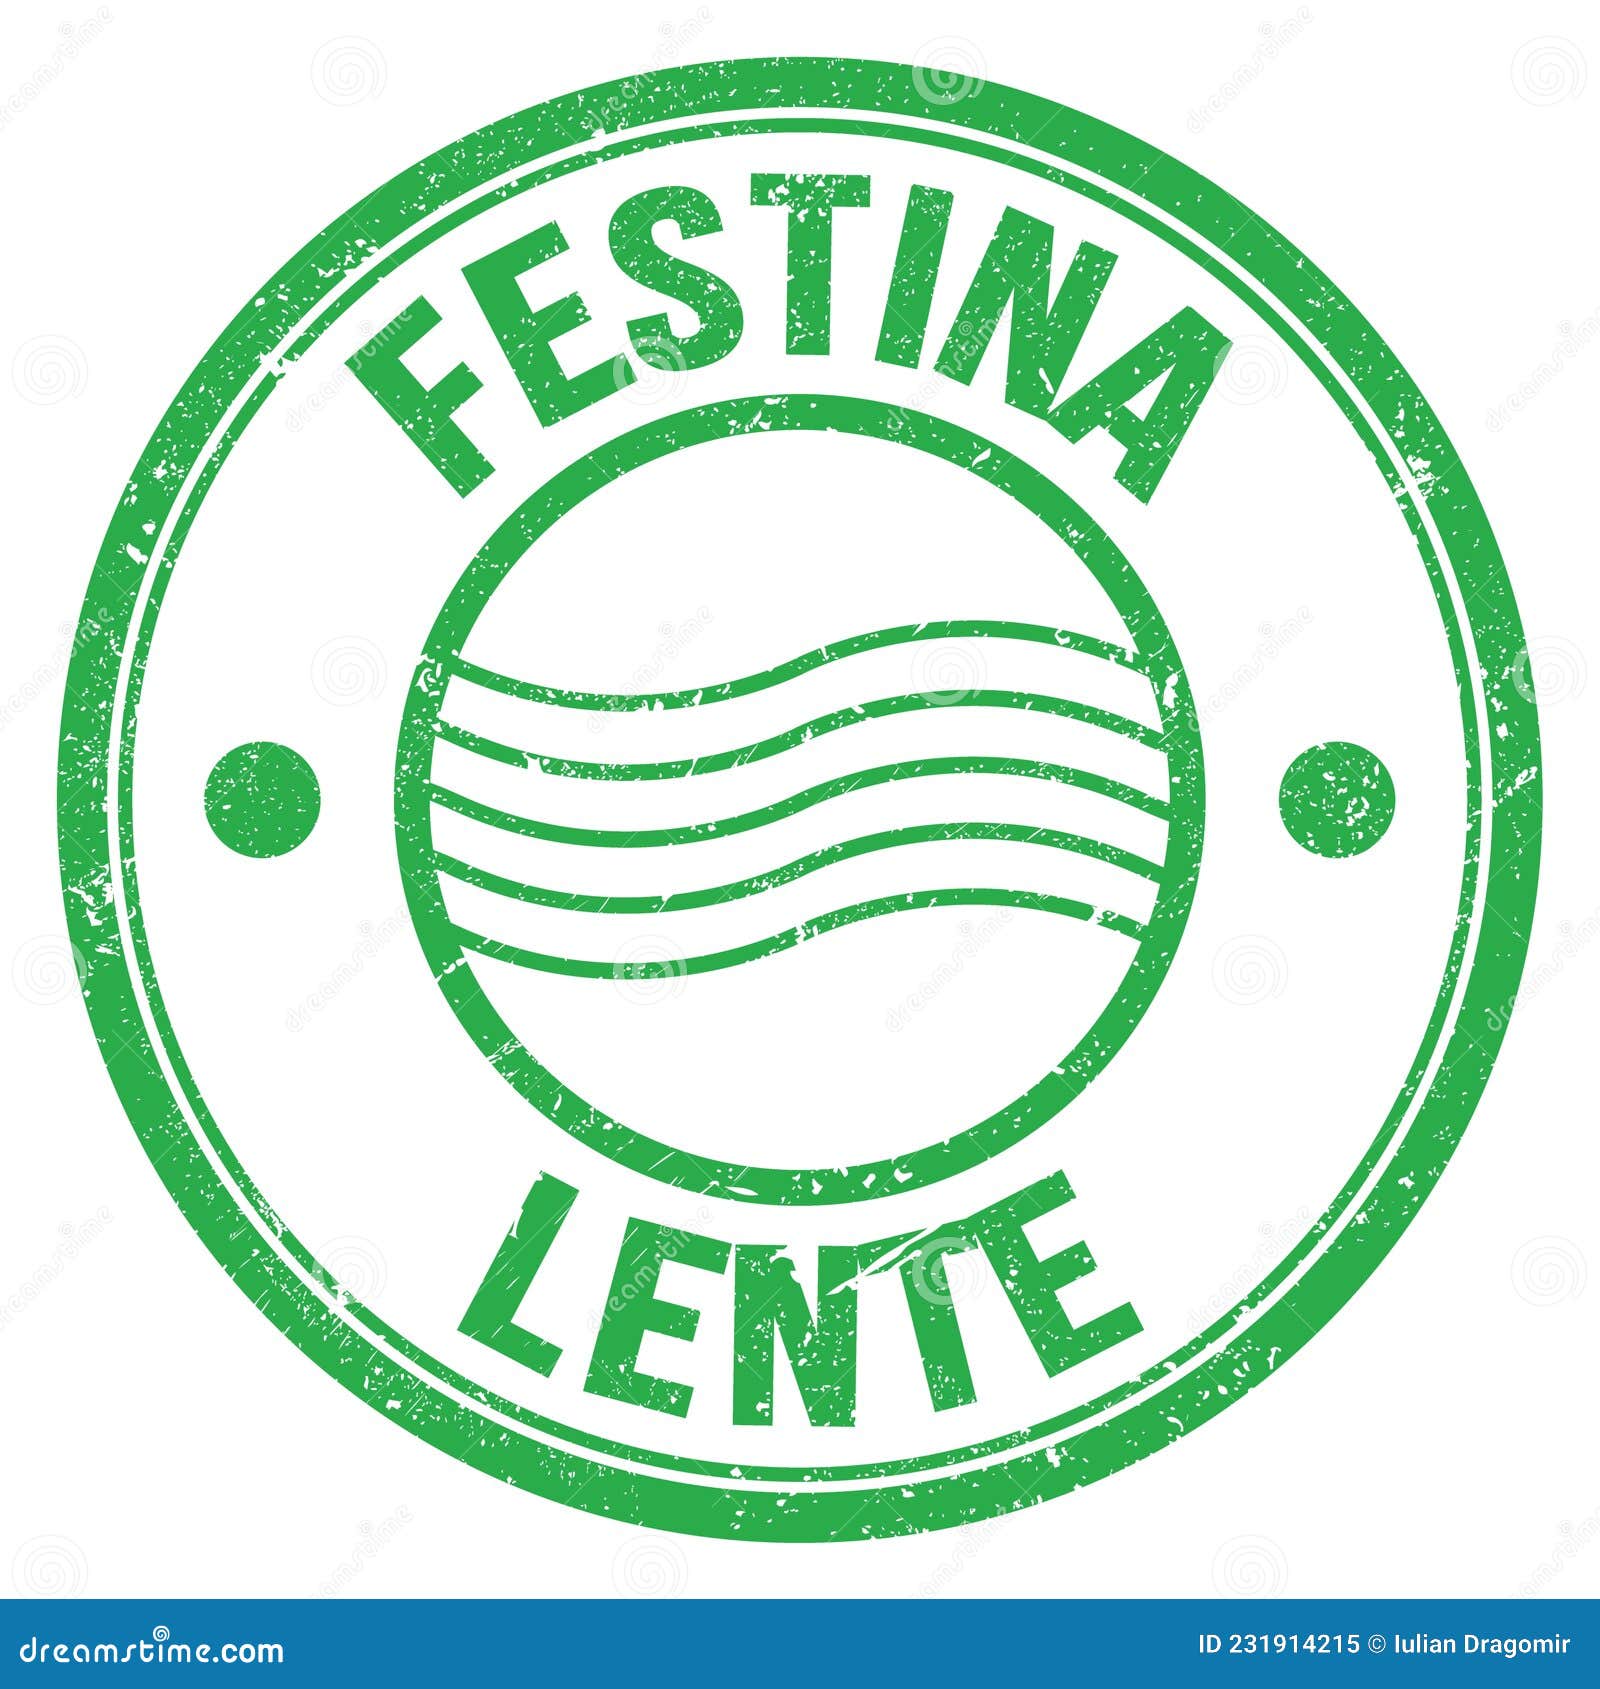 festina lente text on green round postal stamp sign